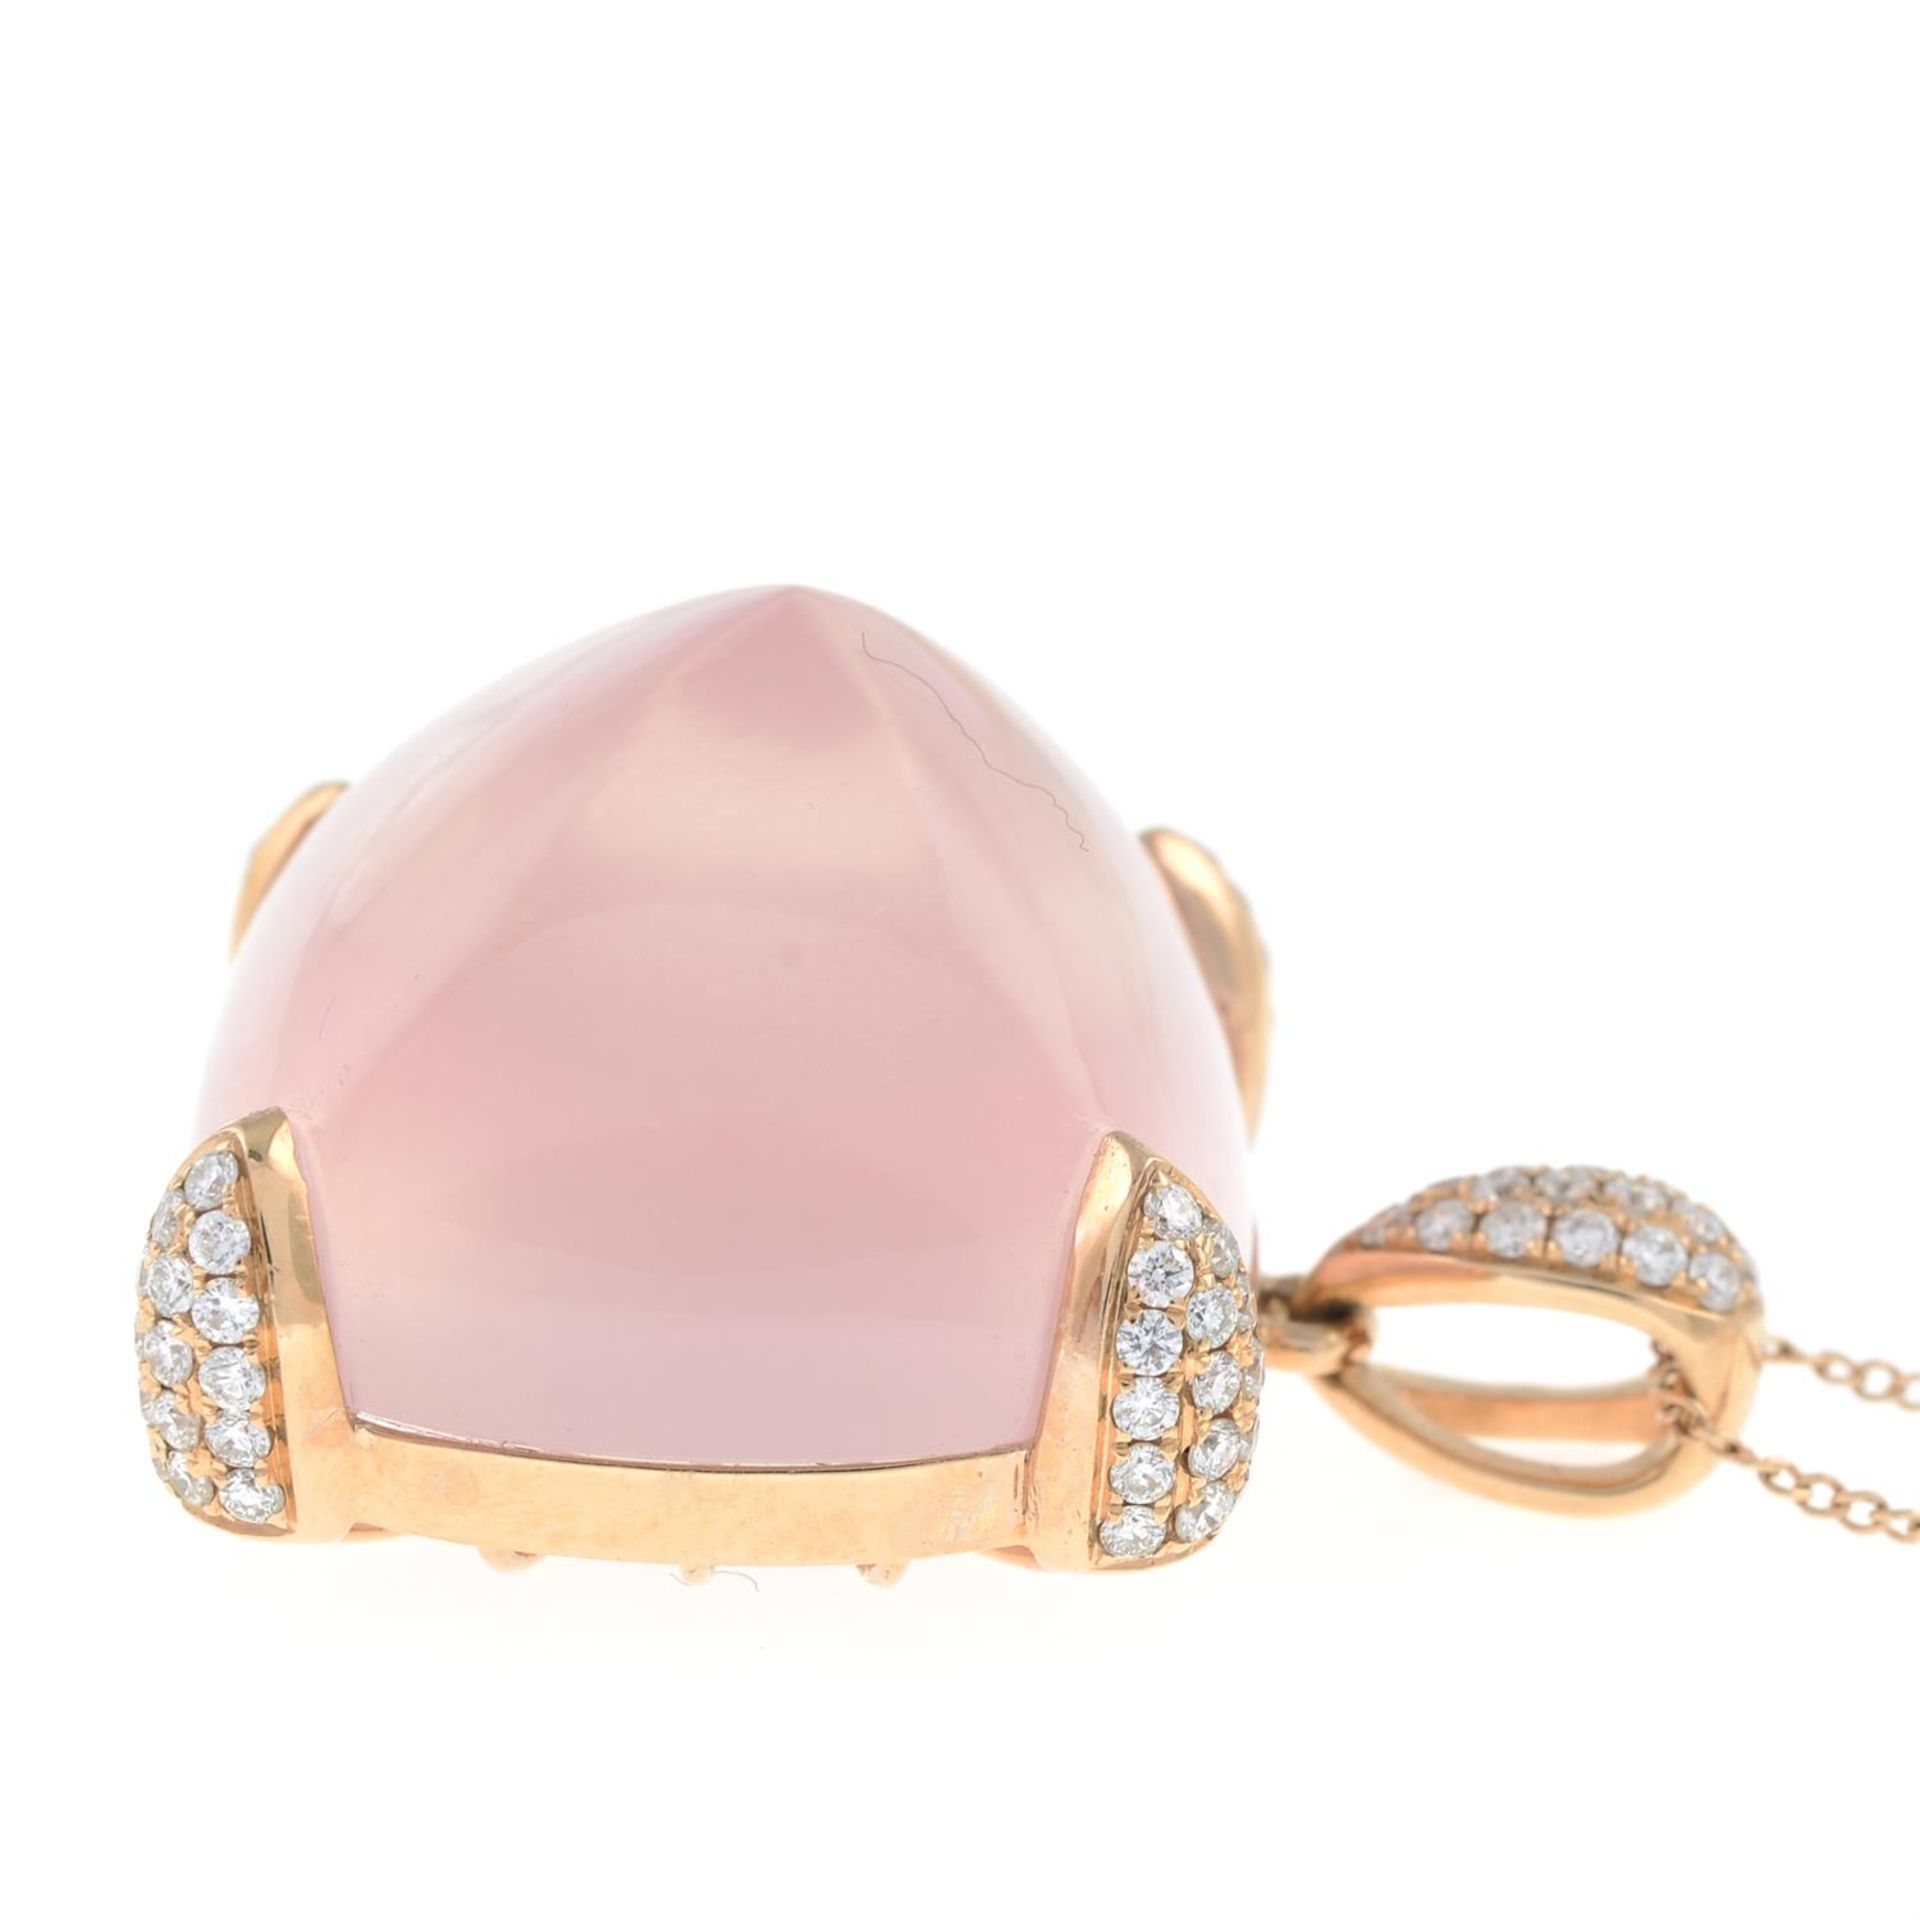 A rose quartz and pavé-set diamond pendant, with 18ct gold chain. - Image 4 of 6